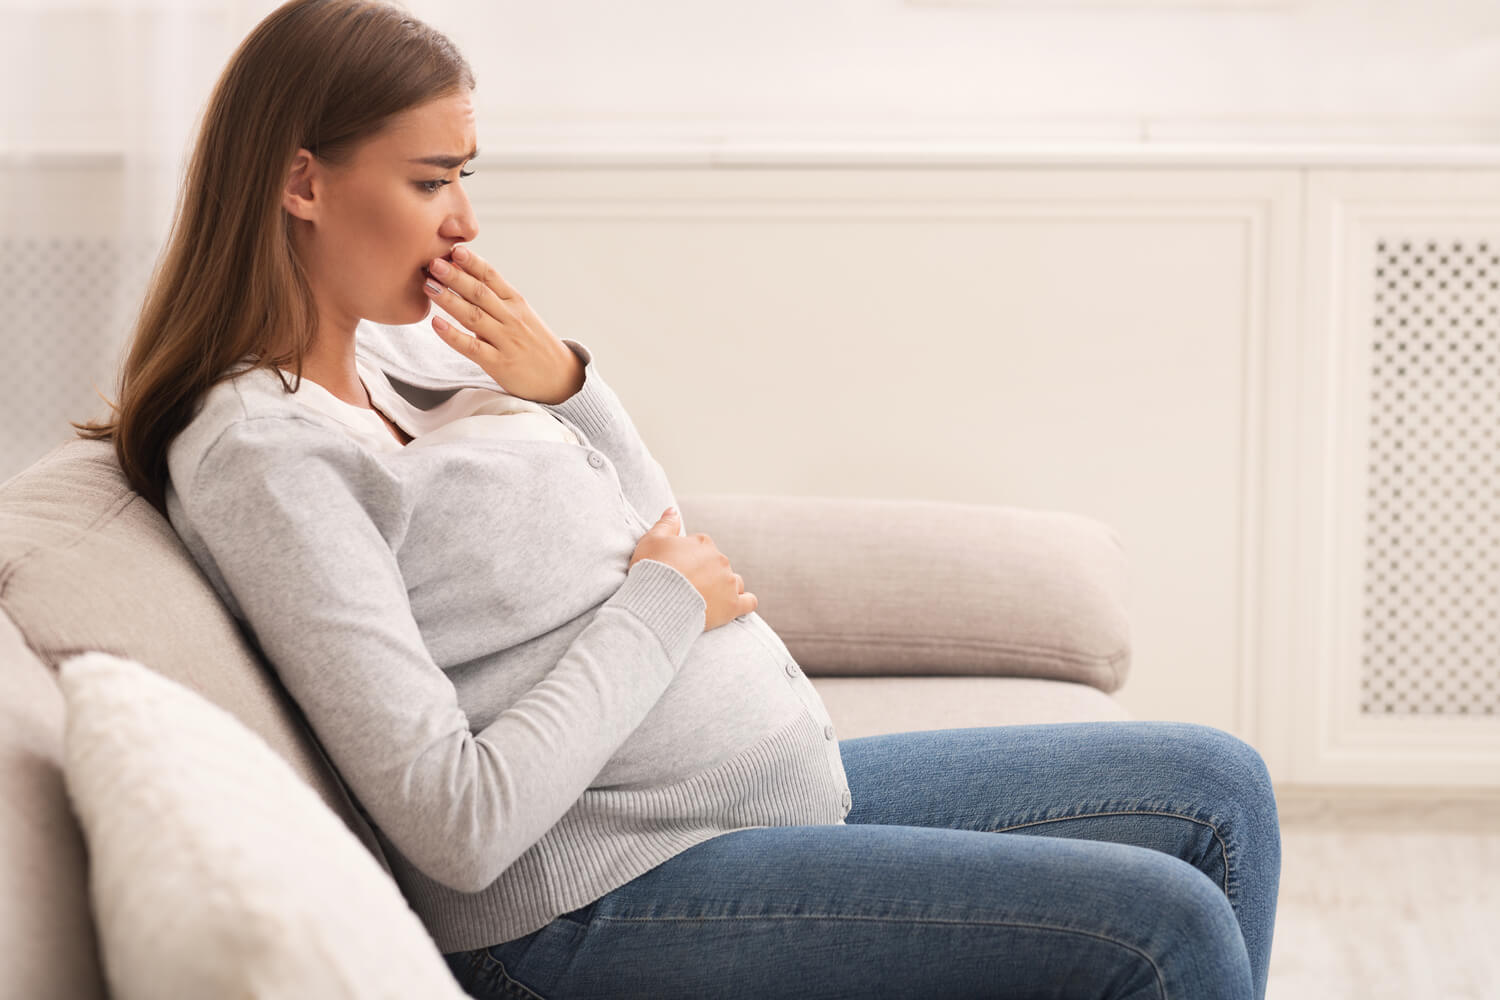 Symptoms of Bad Breath During Pregnancy